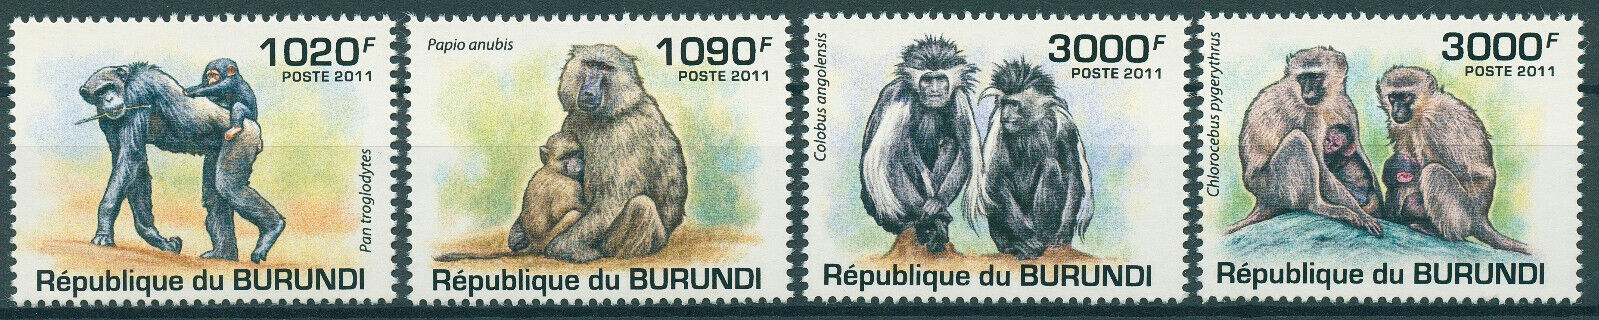 Burundi 2011 MNH Wild Animals Stamps Primates Monkeys Chimpanzees 4v Set